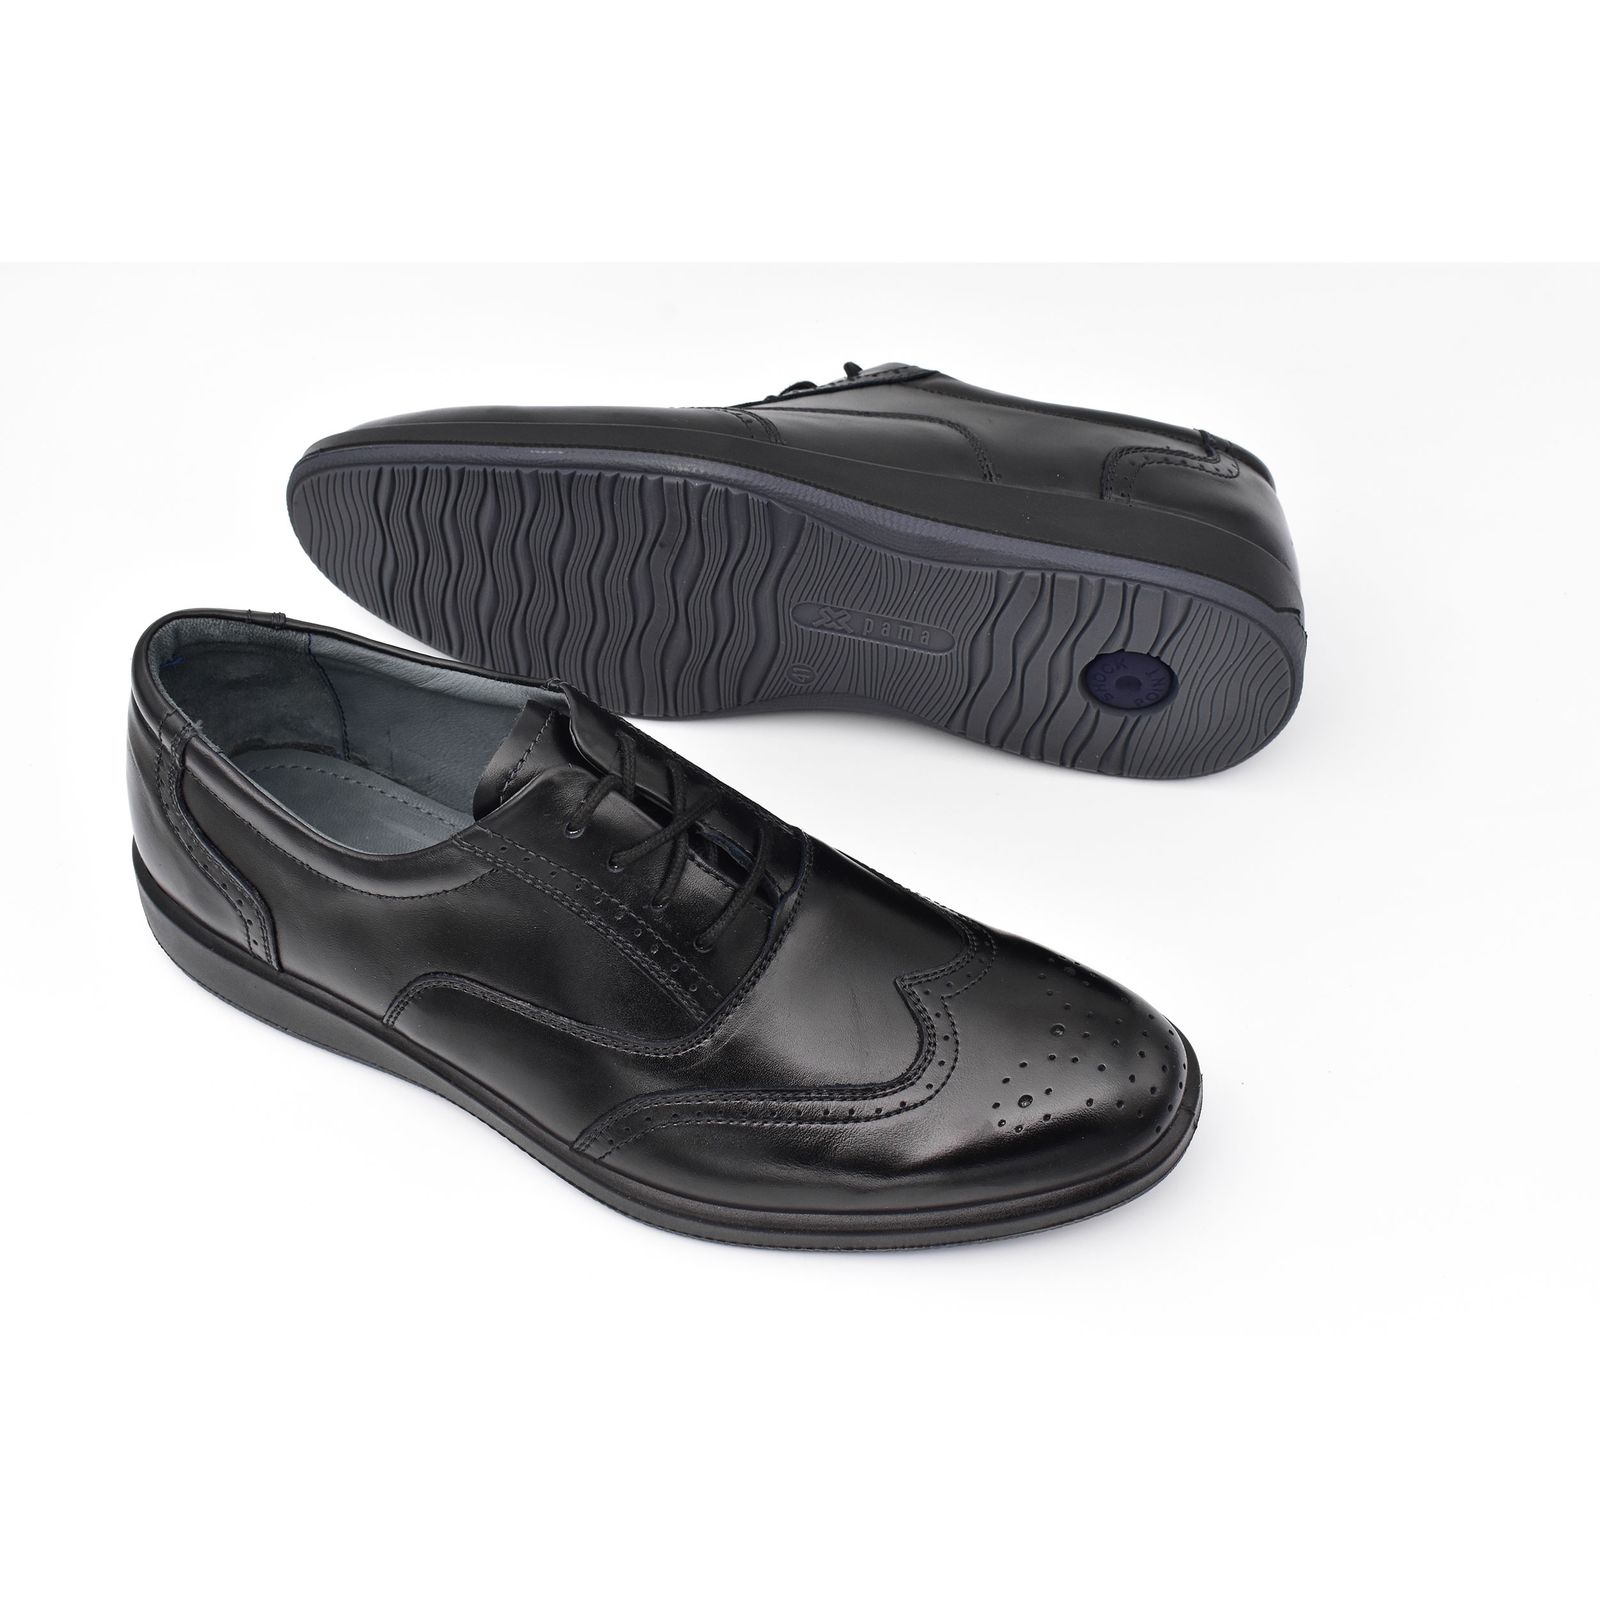 کفش روزمره مردانه پاما مدل F0 کد G1125 -  - 10